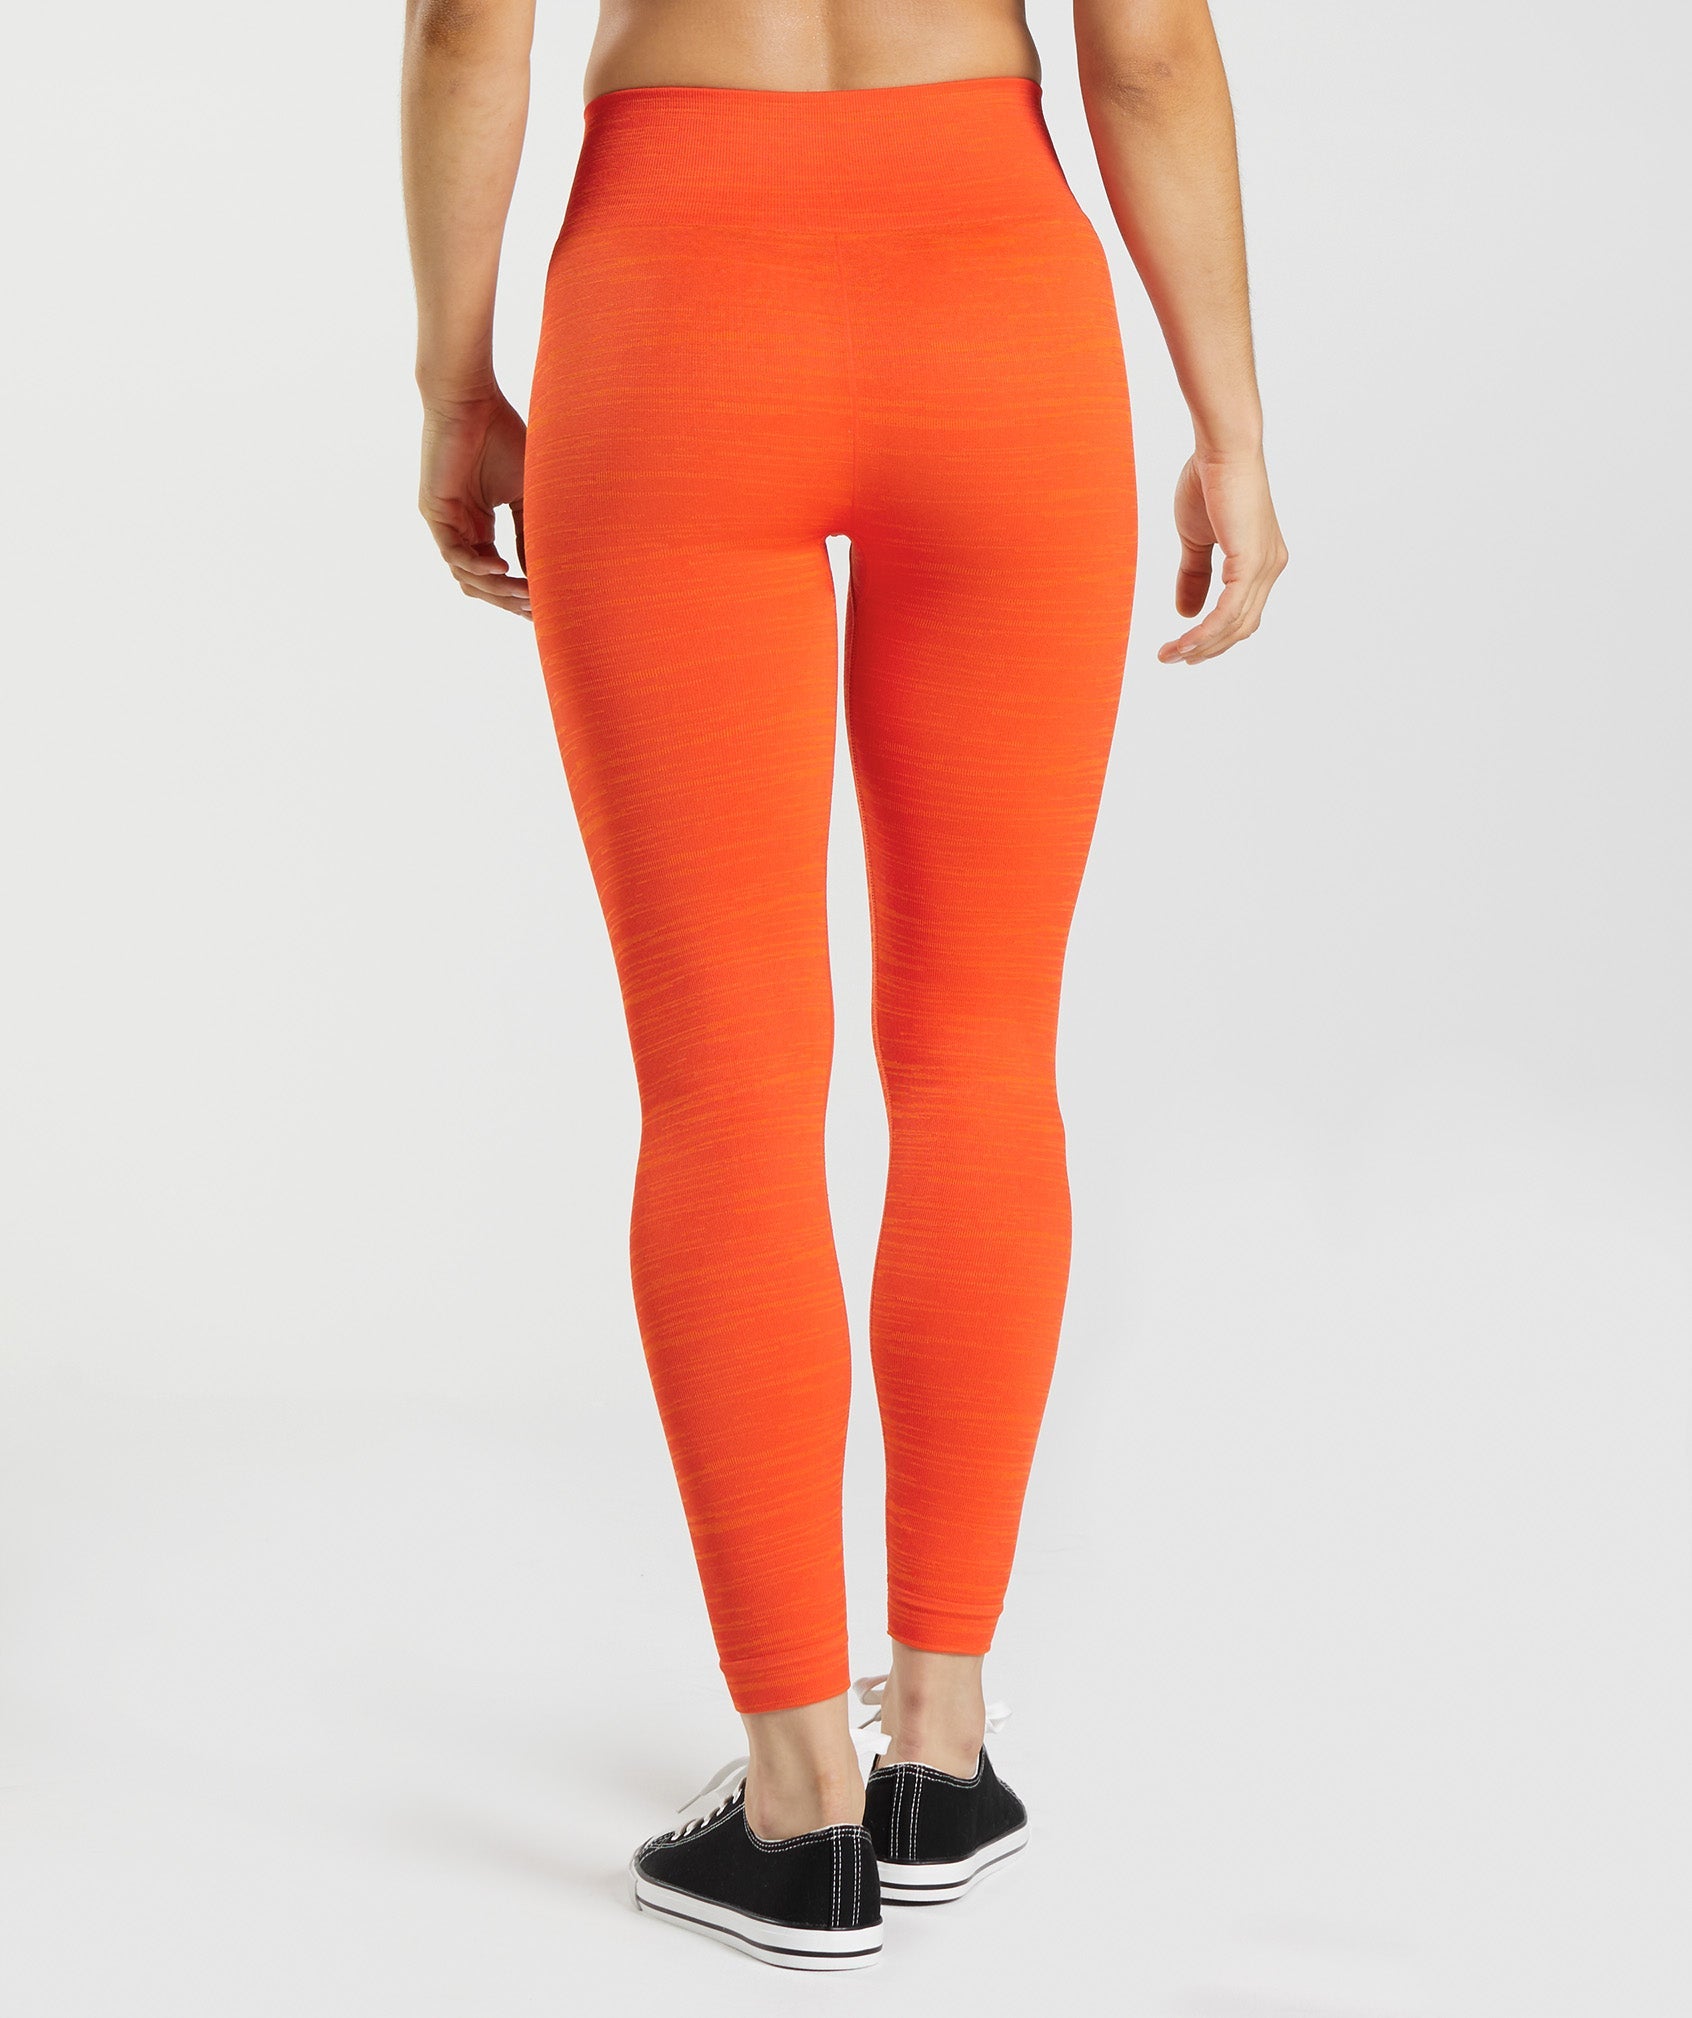 Red Orange Mandala Meditation Yoga Pants Leggings XS - XL